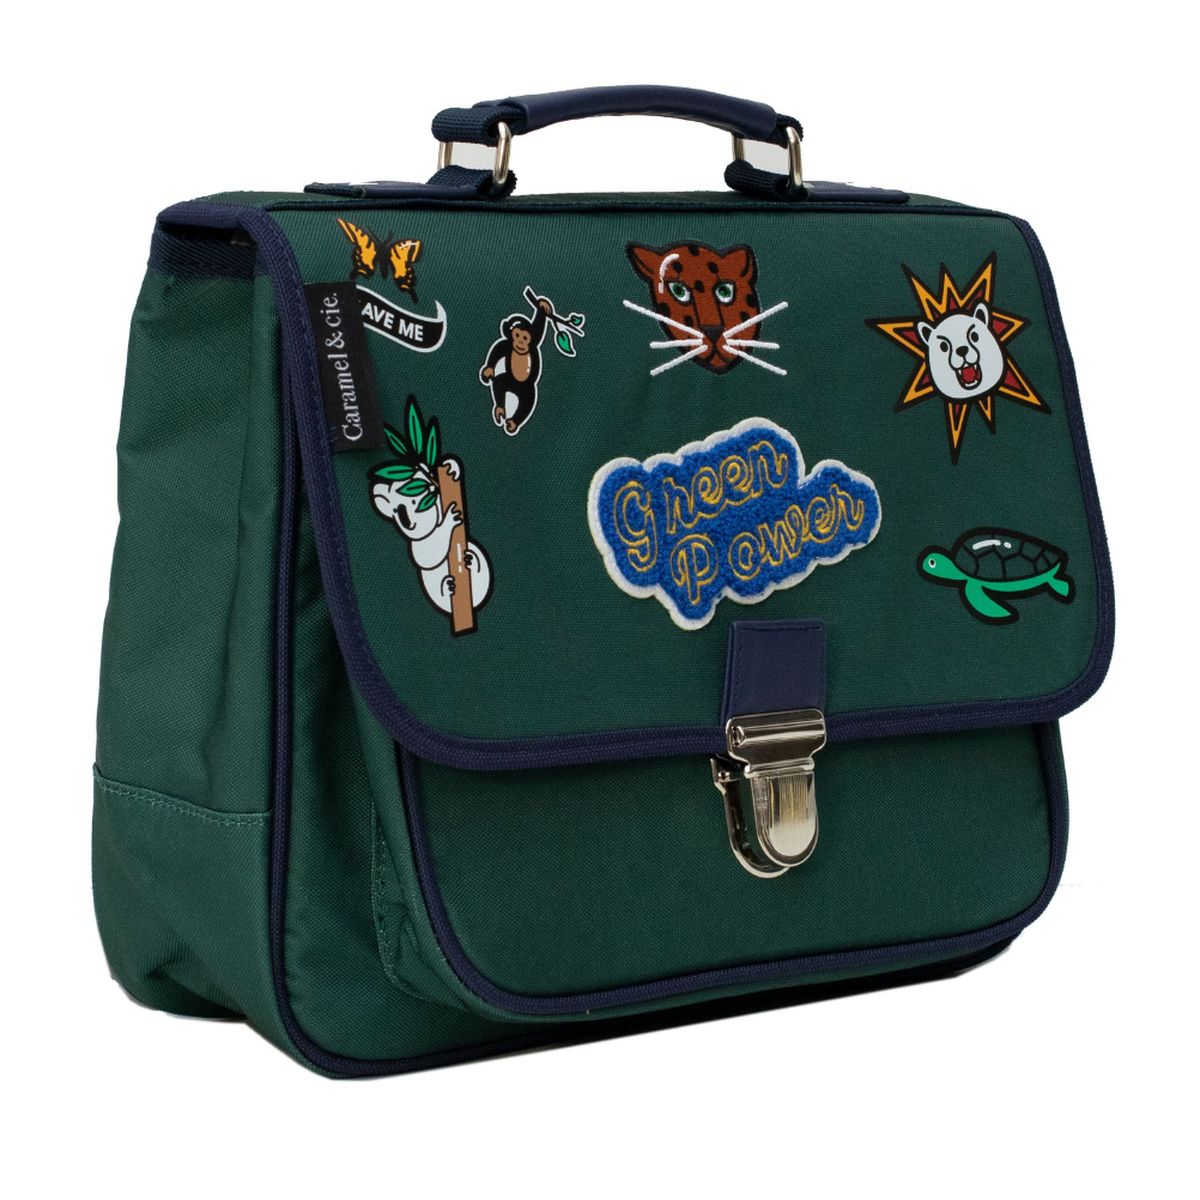 Small School Bag Caramel et cie - Green